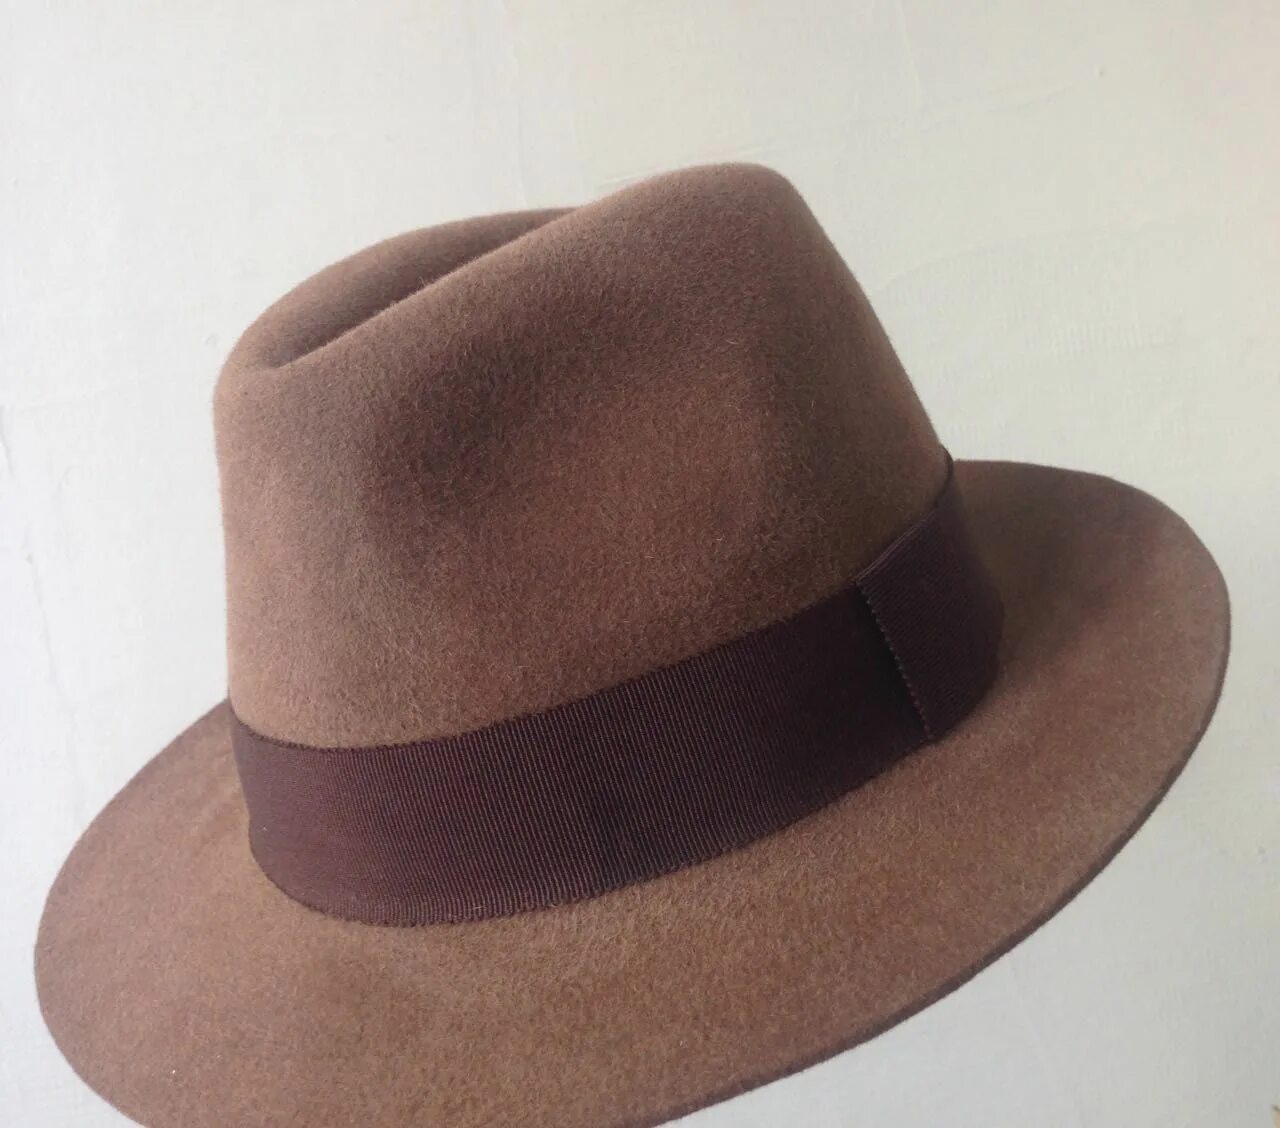 Мужская шляпа Криспи. Eureka шляпа мужская. Фетровая шляпа Федора Бове. Мужчина в шляпе. Шляпы продажа